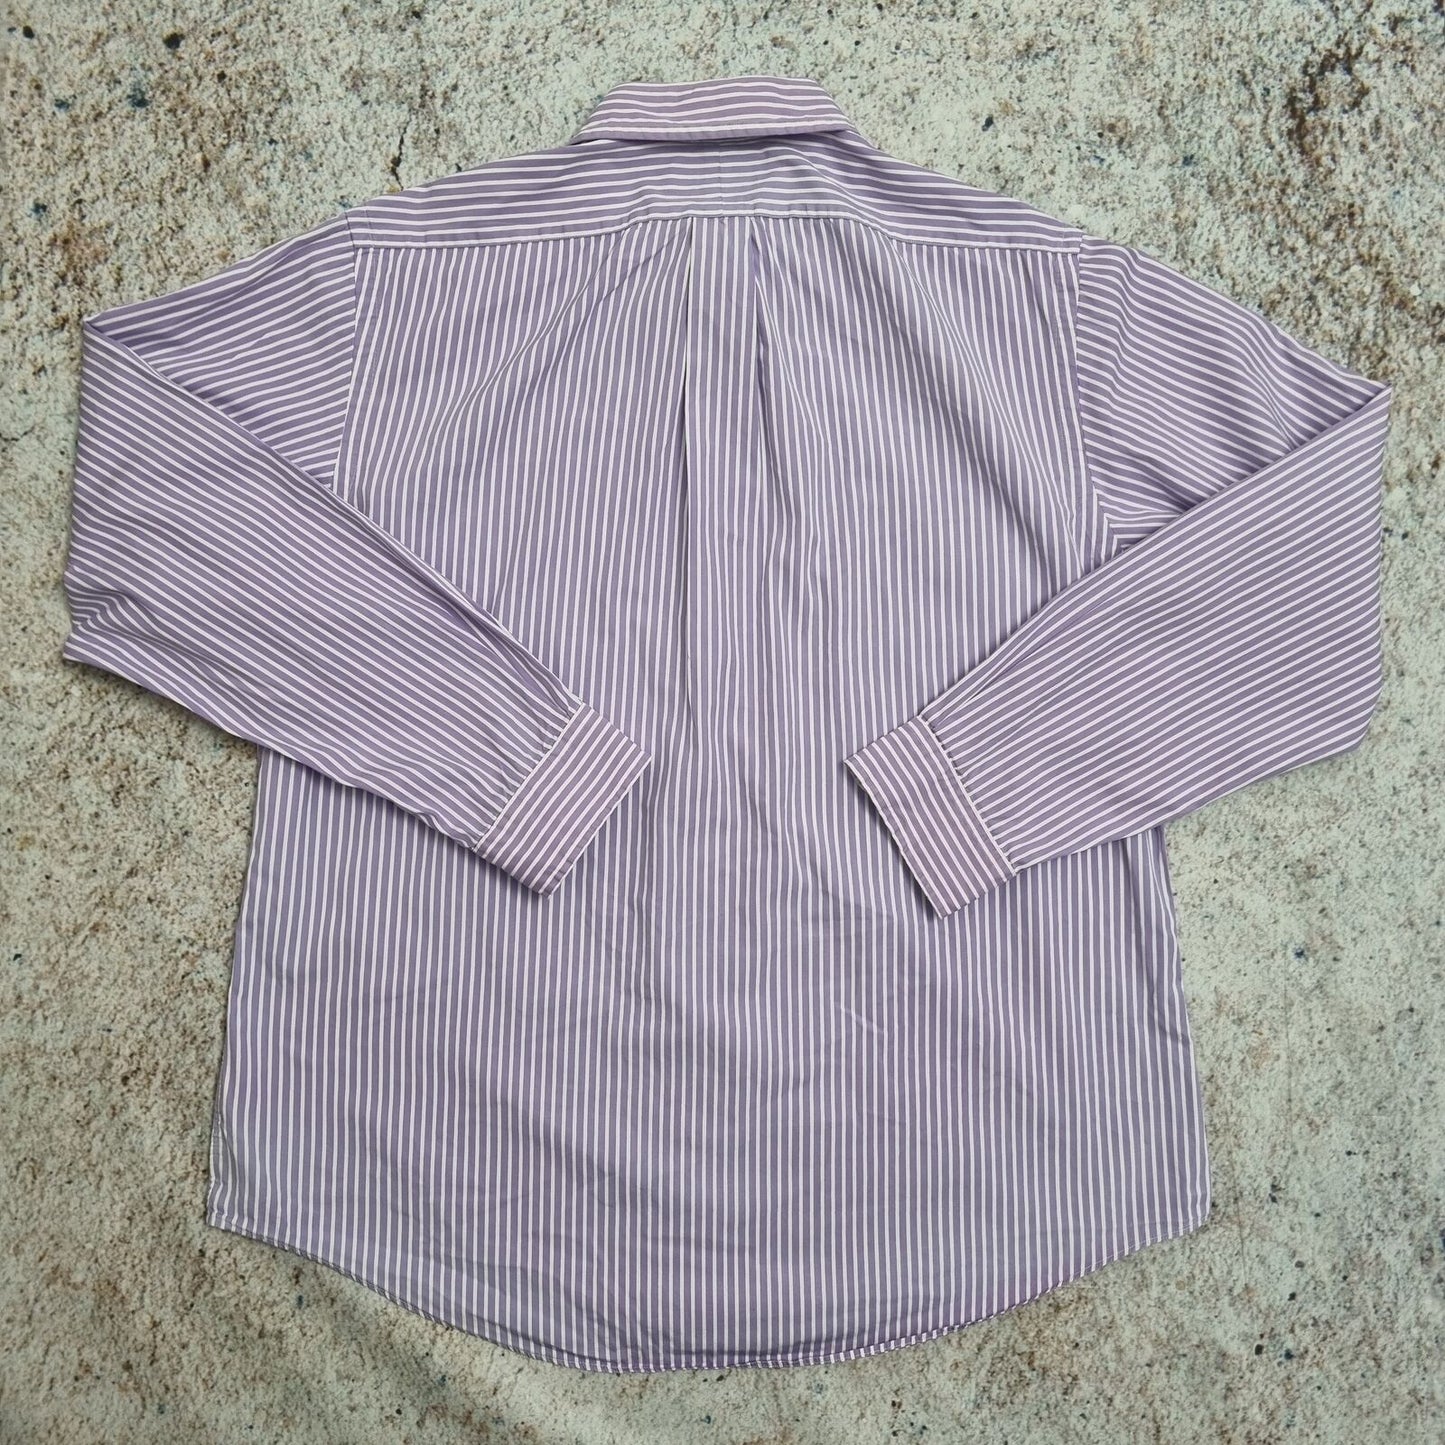 Polo Ralph Lauren OXFORD SHIRT CUSTOM FIT STRIPE - Purple - Size XL